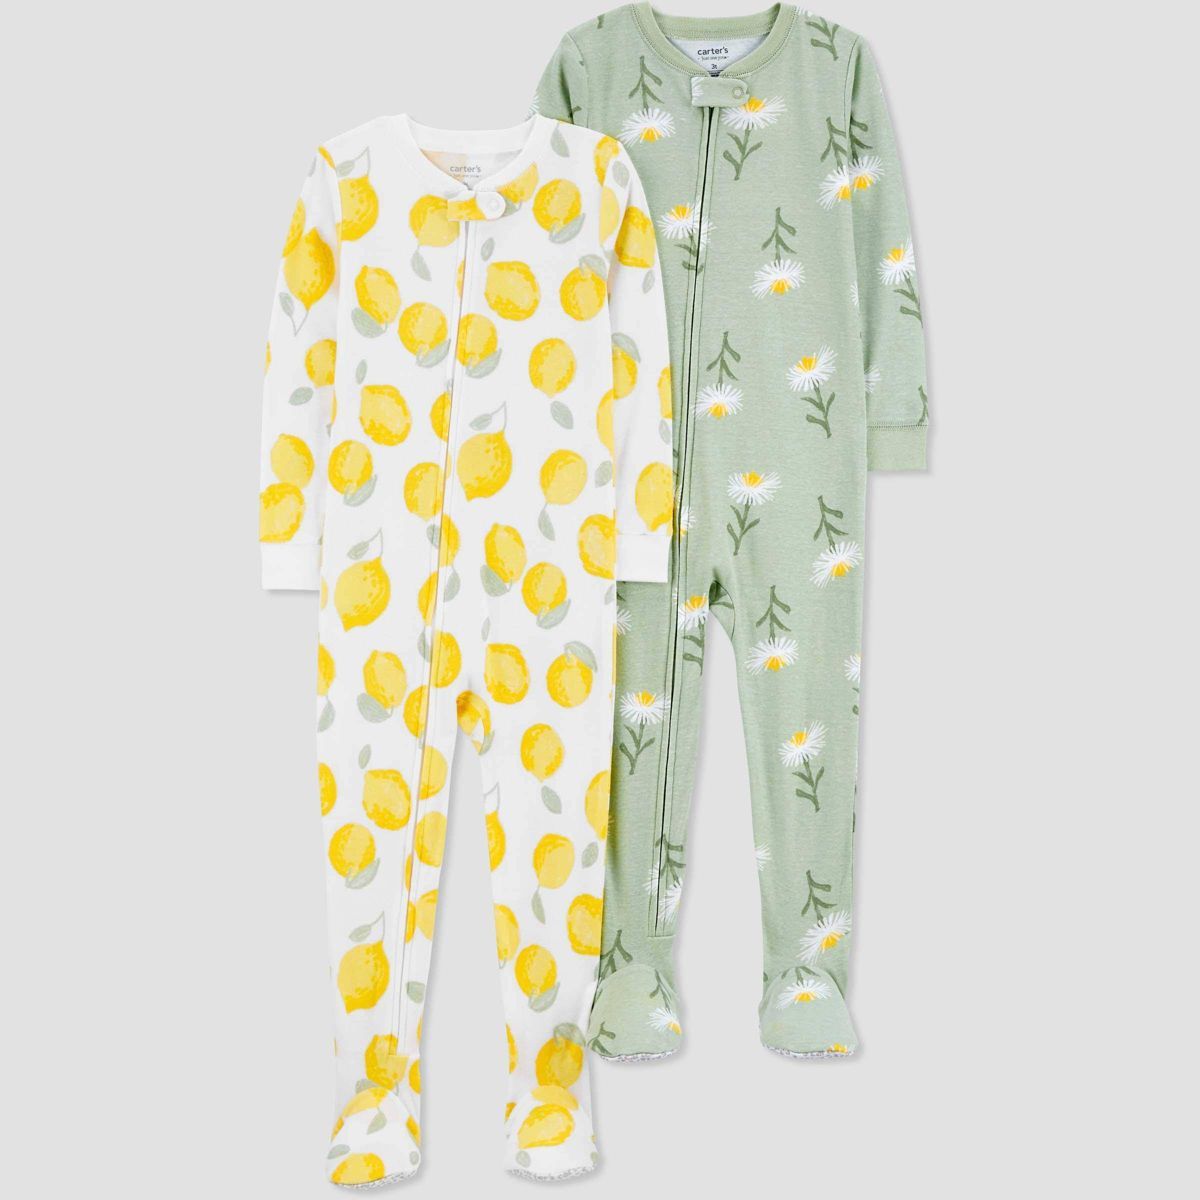 Carter's Just One You® Toddler Girls' Lemon & Floral Printed Footed Pajamas - Green/Yellow | Target